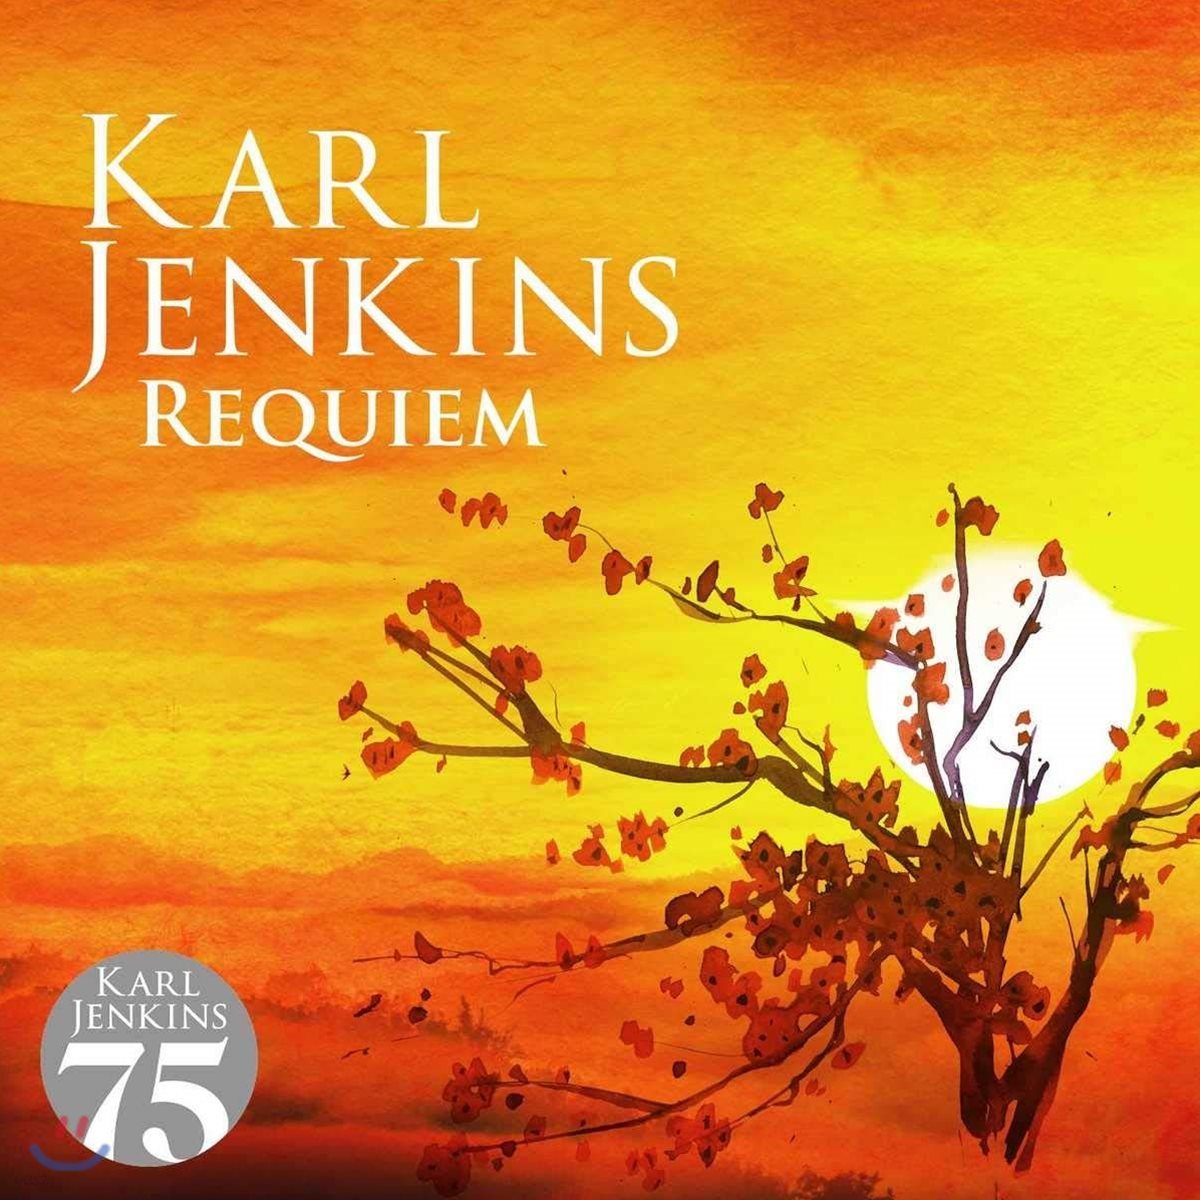 Karl Jenkins 칼 젠킨스: 레퀴엠 (Requiem)